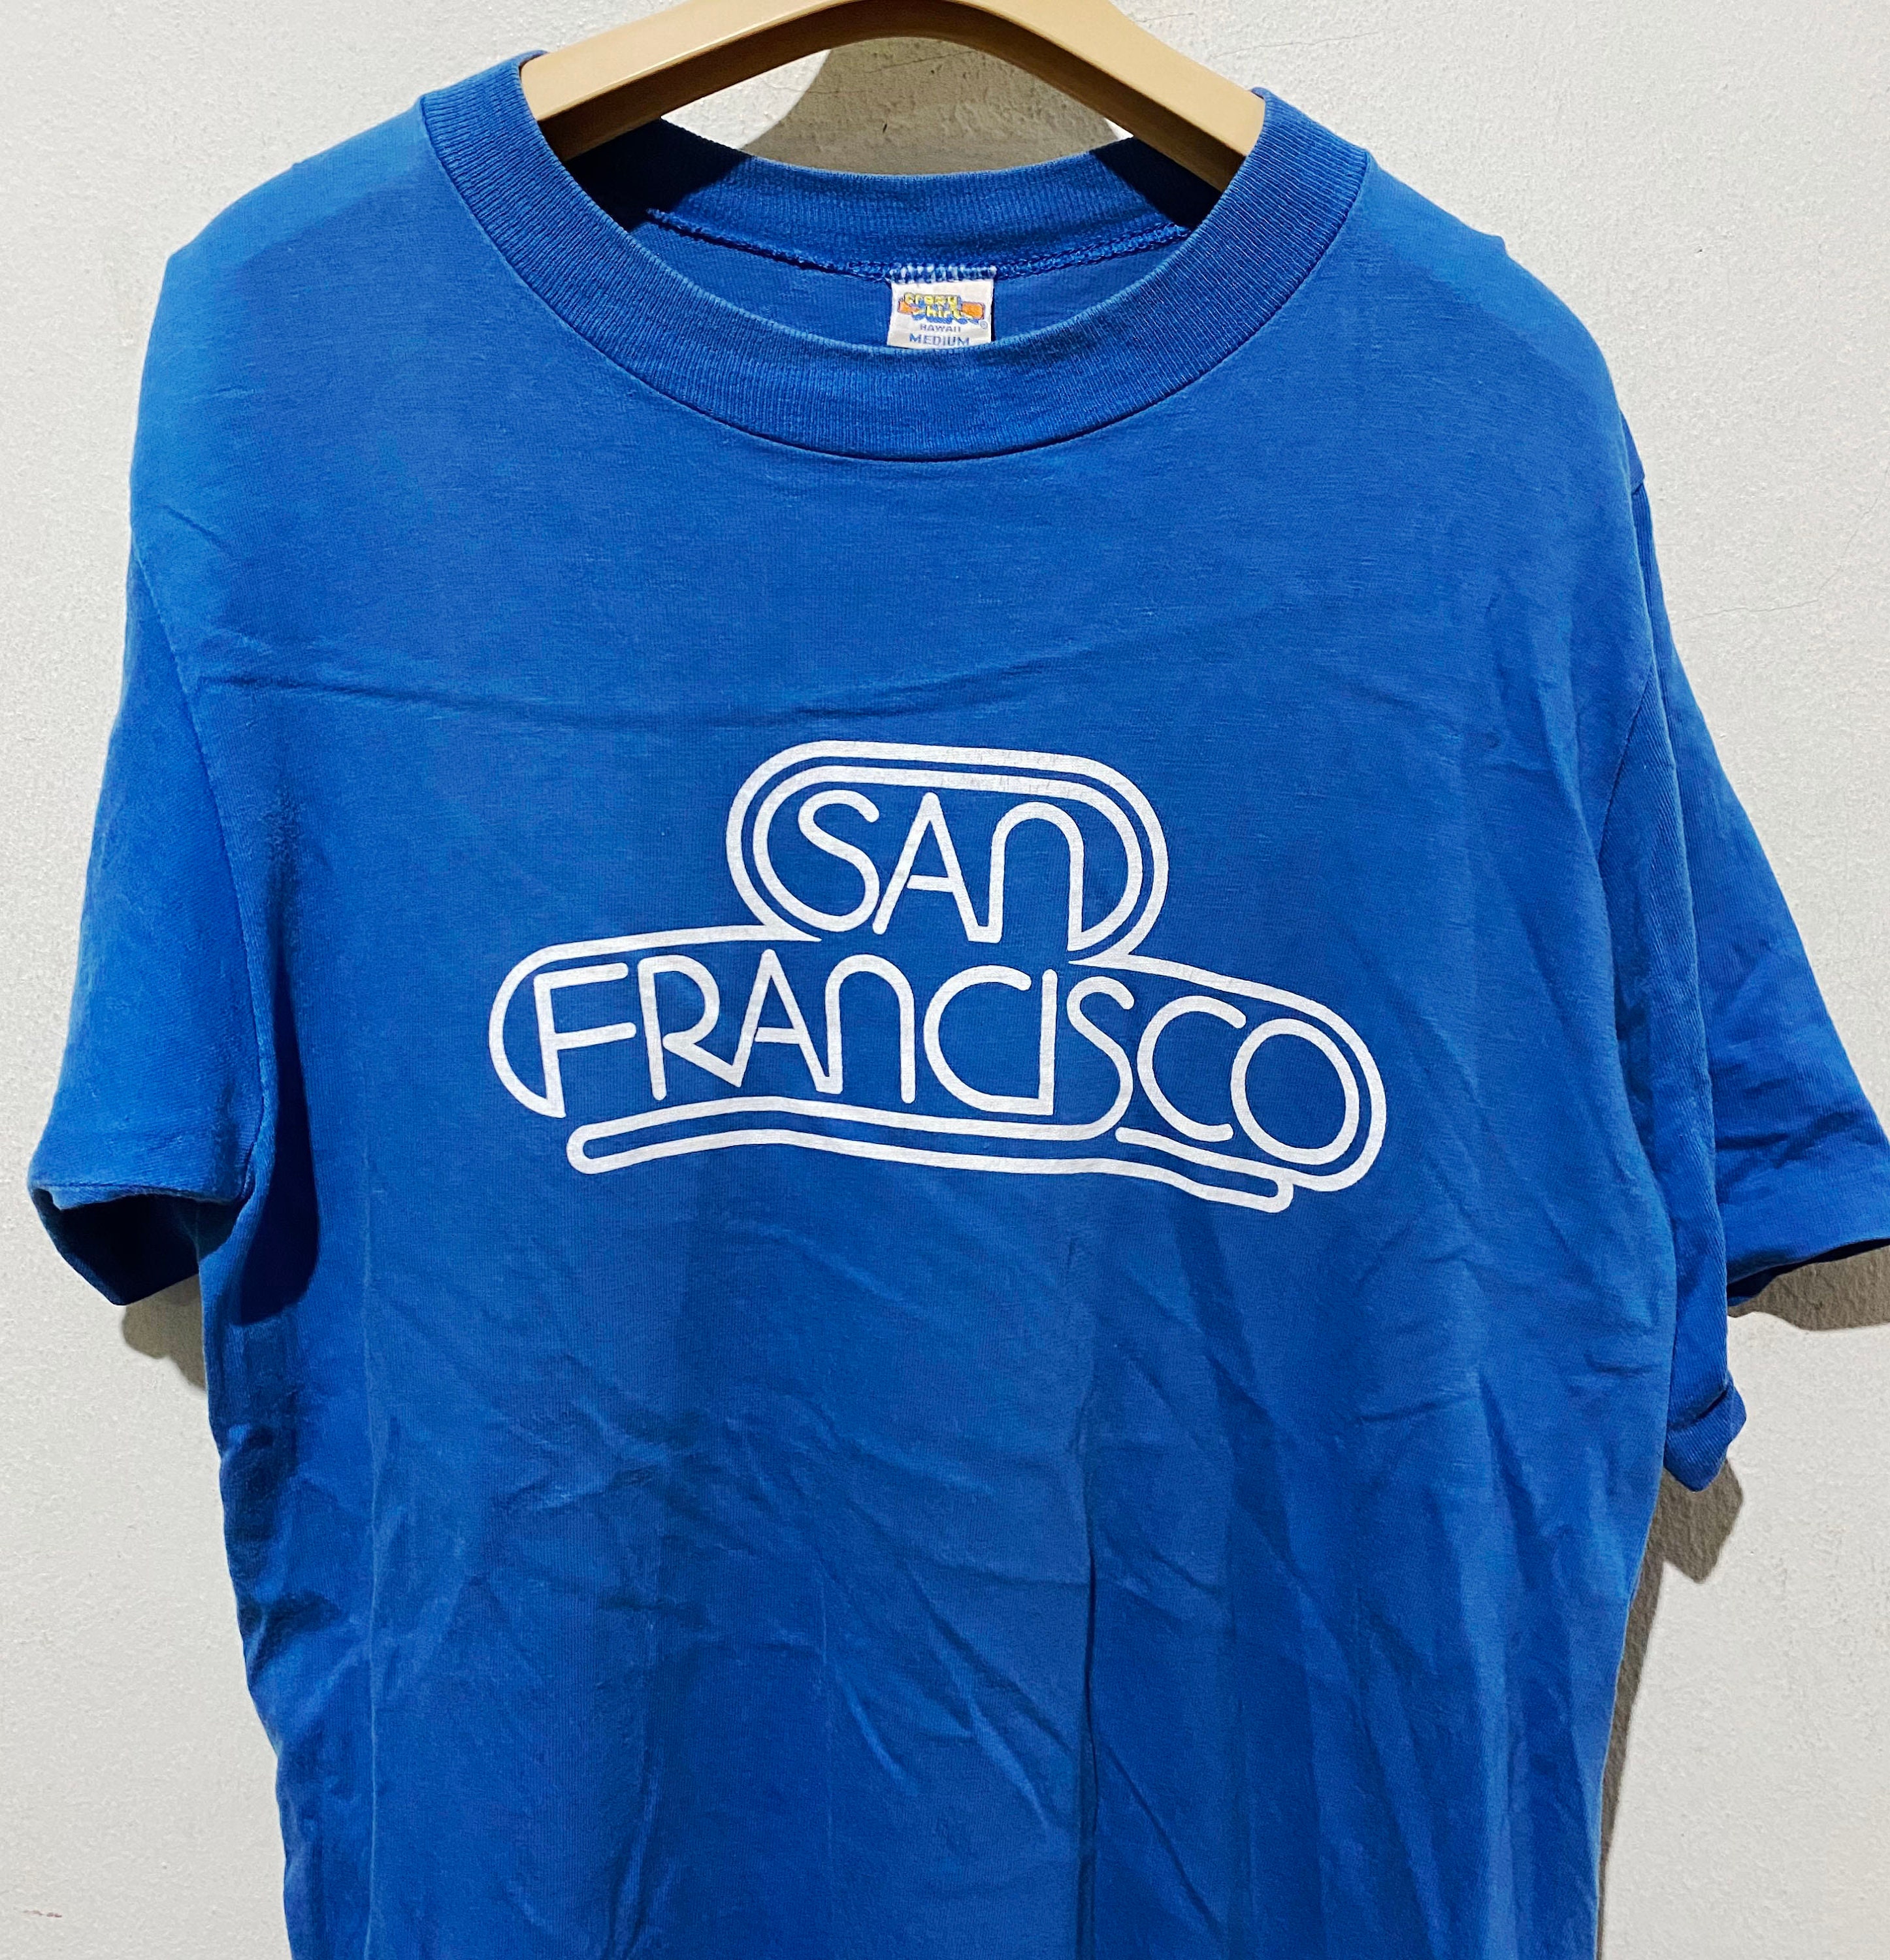 Vintage San Francisco Shirt Size M Free Shipping | Etsy